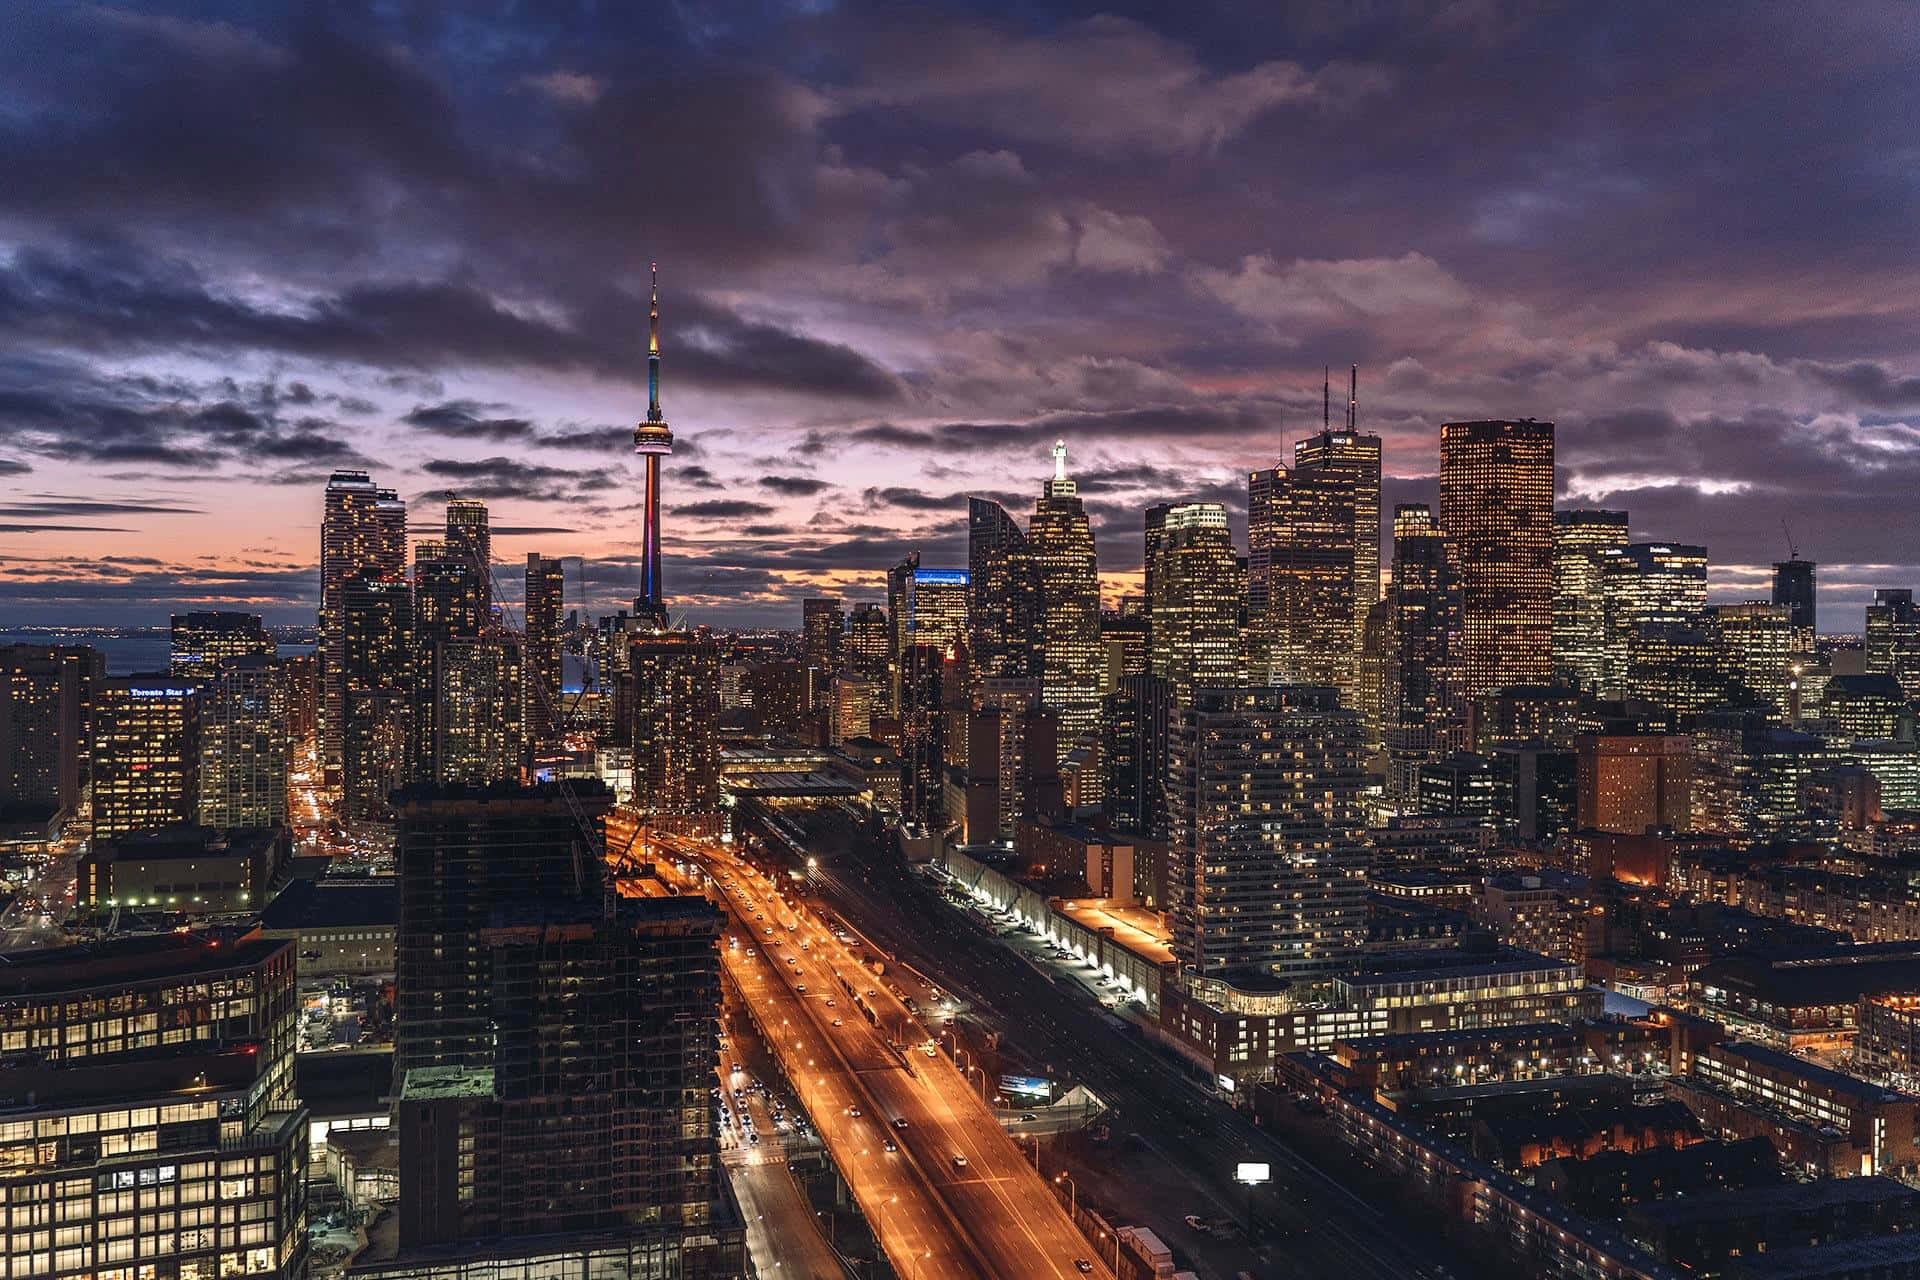 The stunning Toronto skyline